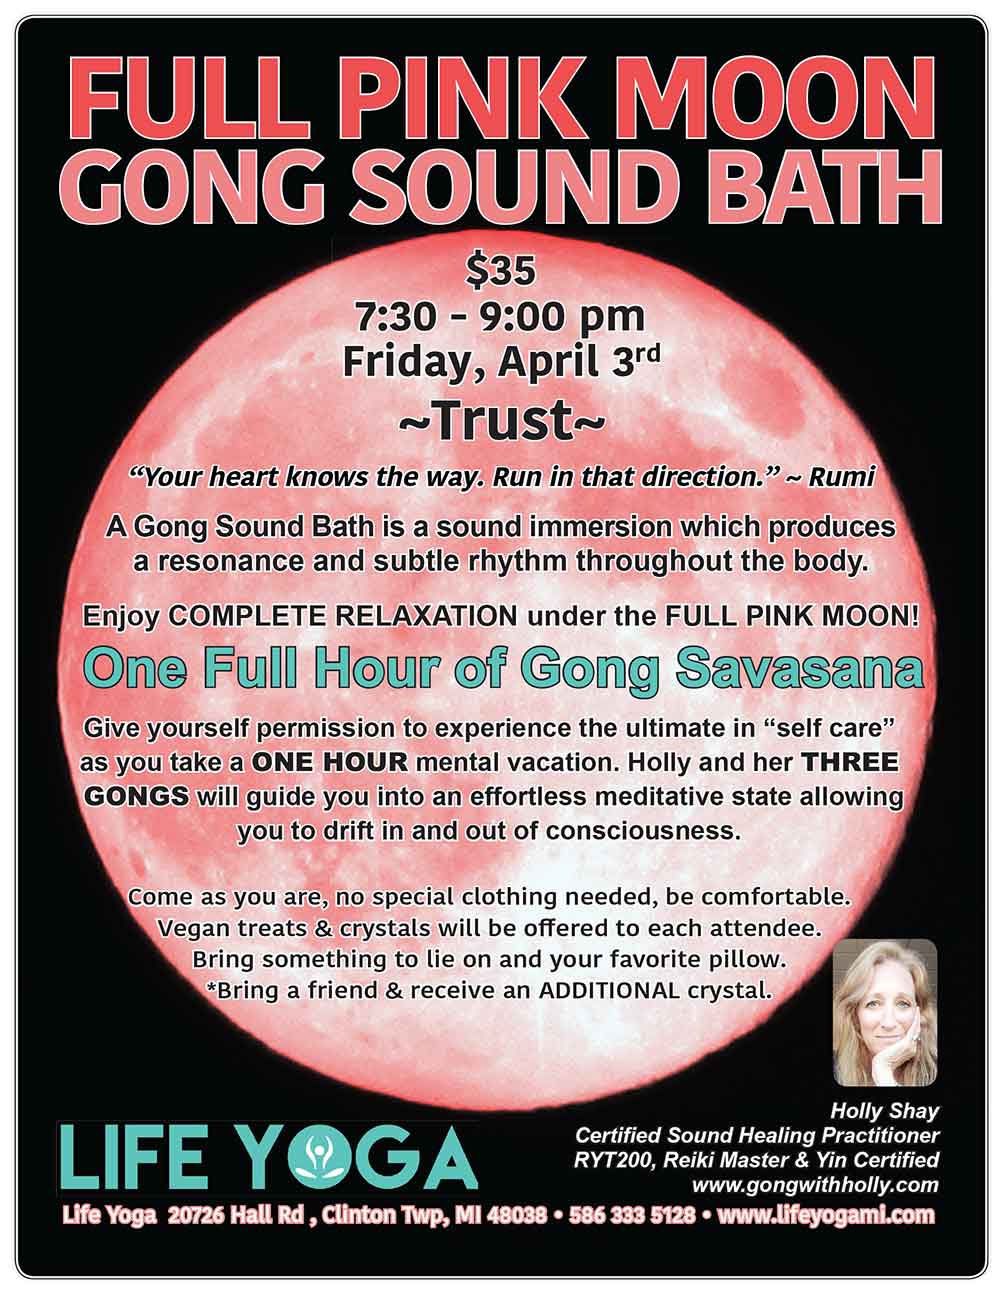 Full Pink Moon Gong Sound Bath